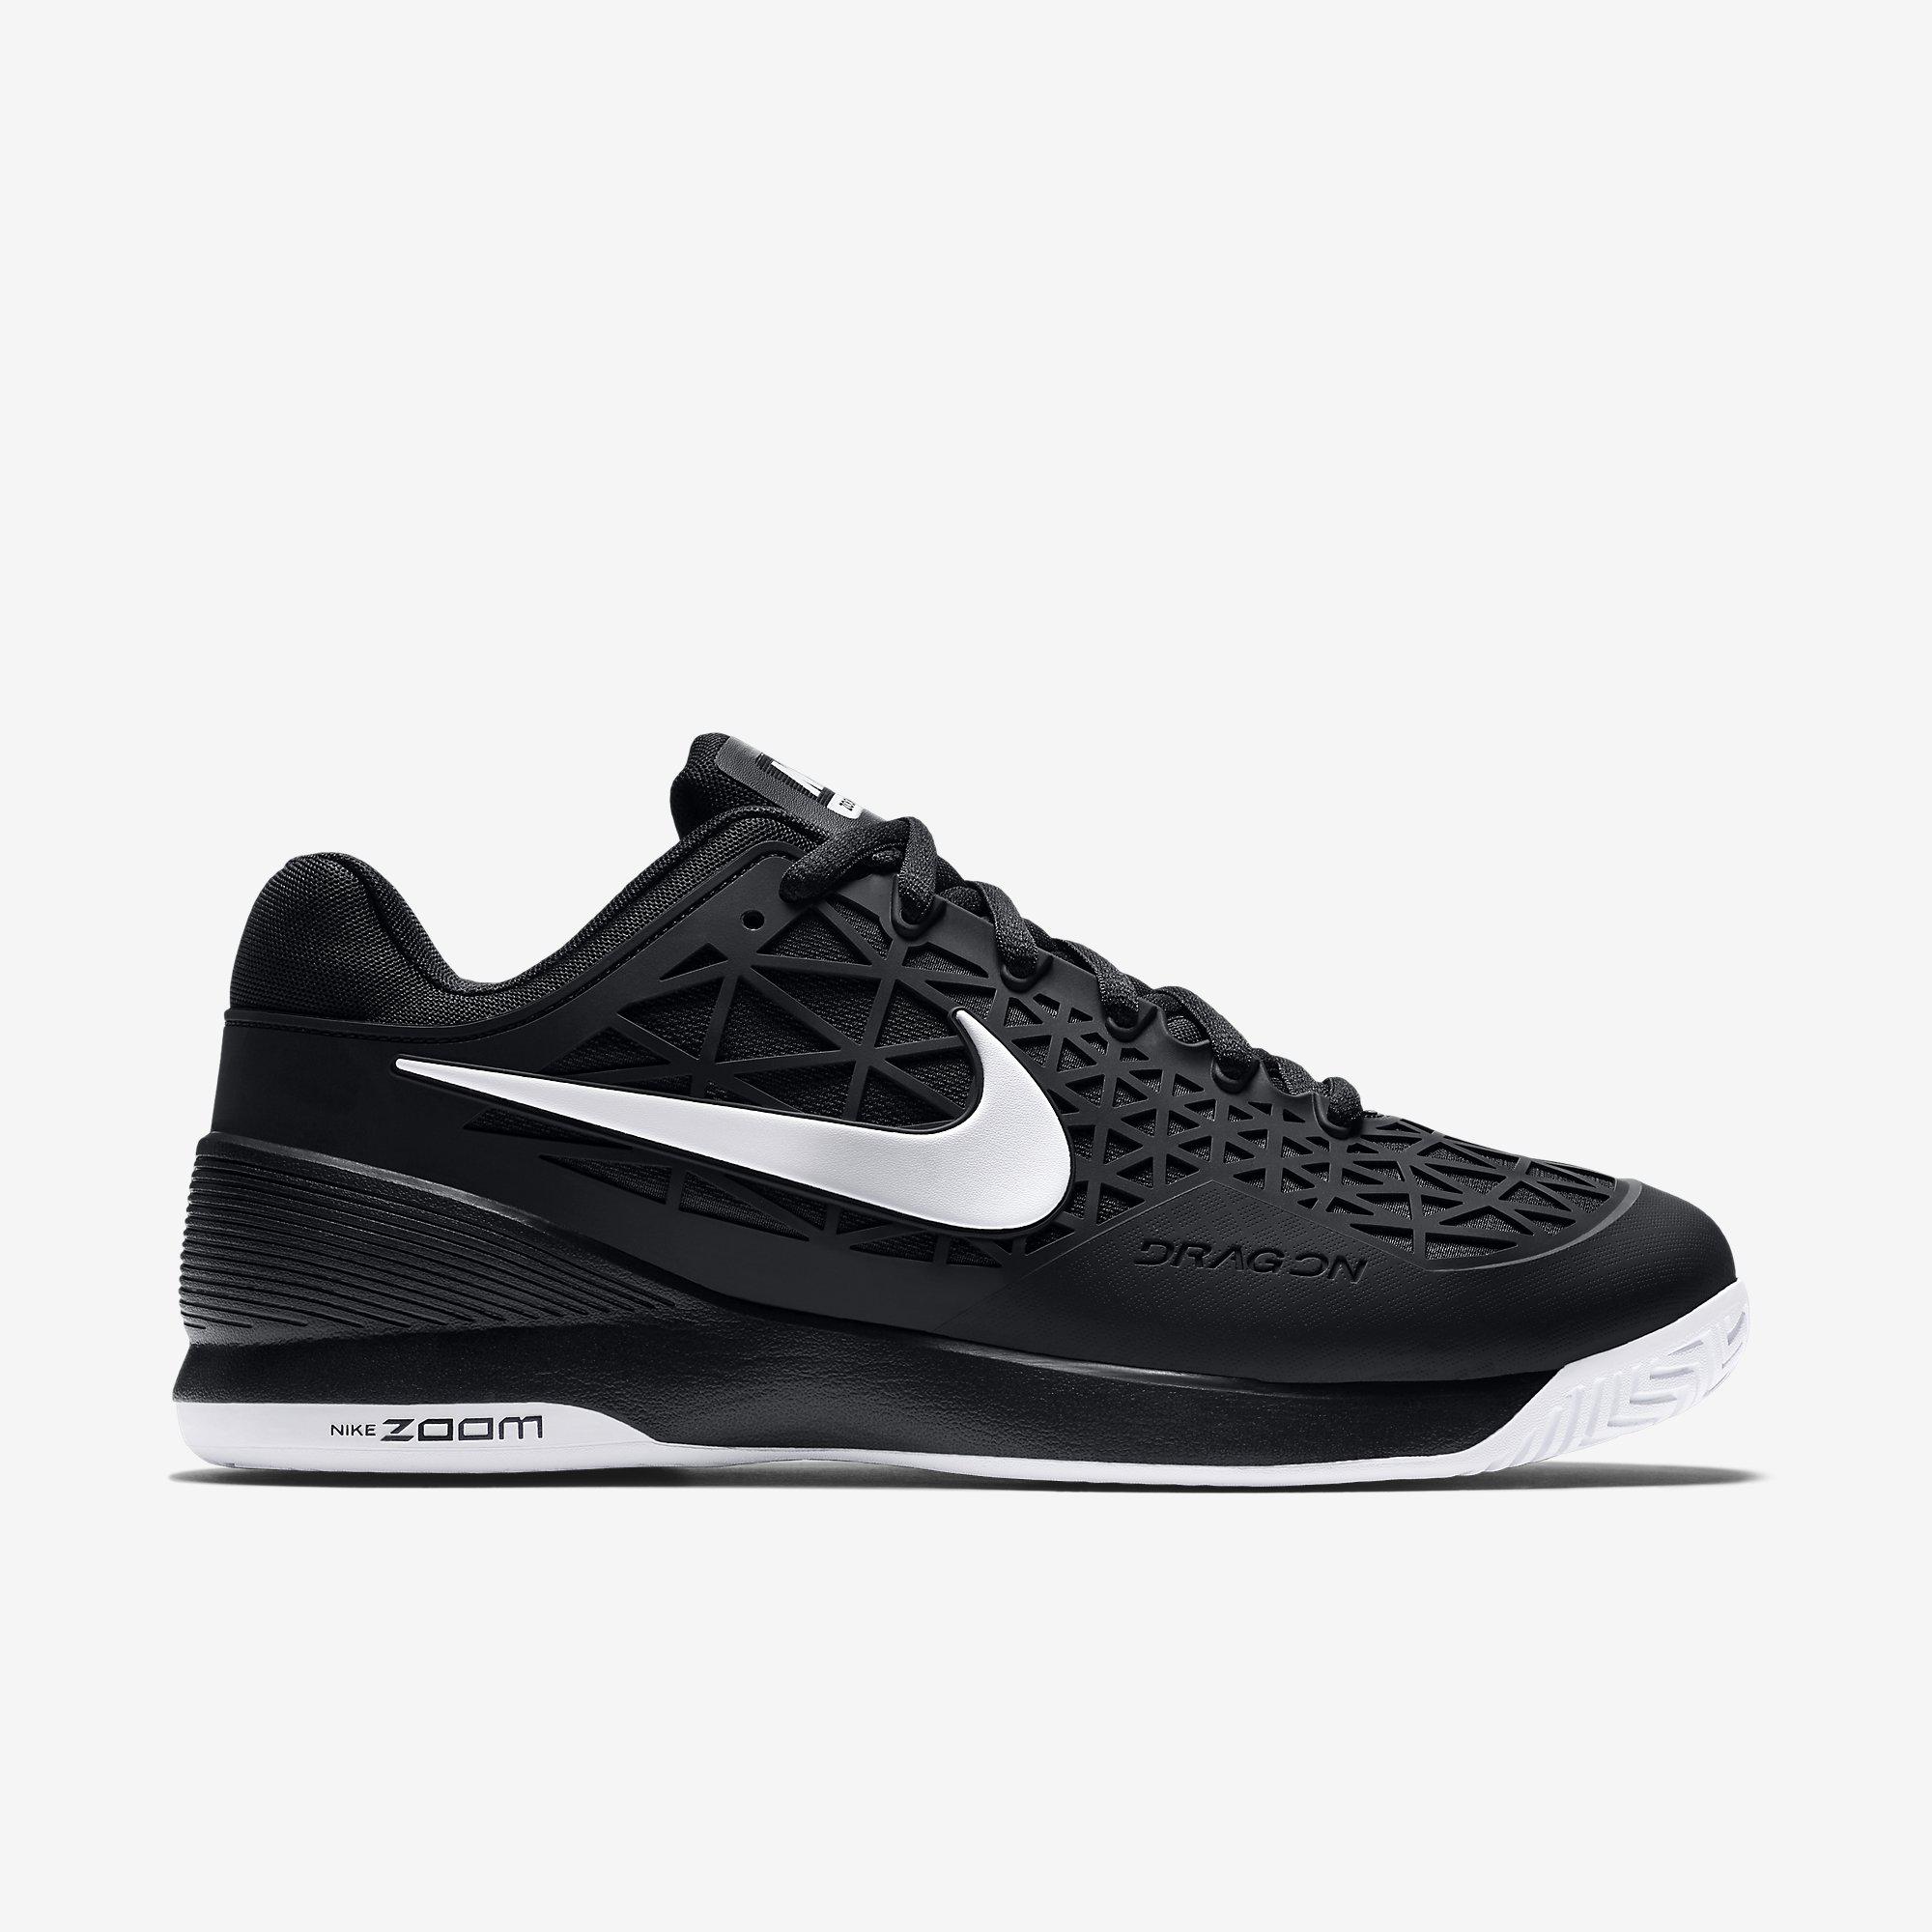 alcanzar falta de aliento Descompostura Nike Mens Zoom Cage 2 Tennis Shoes - Black/White - Tennisnuts.com